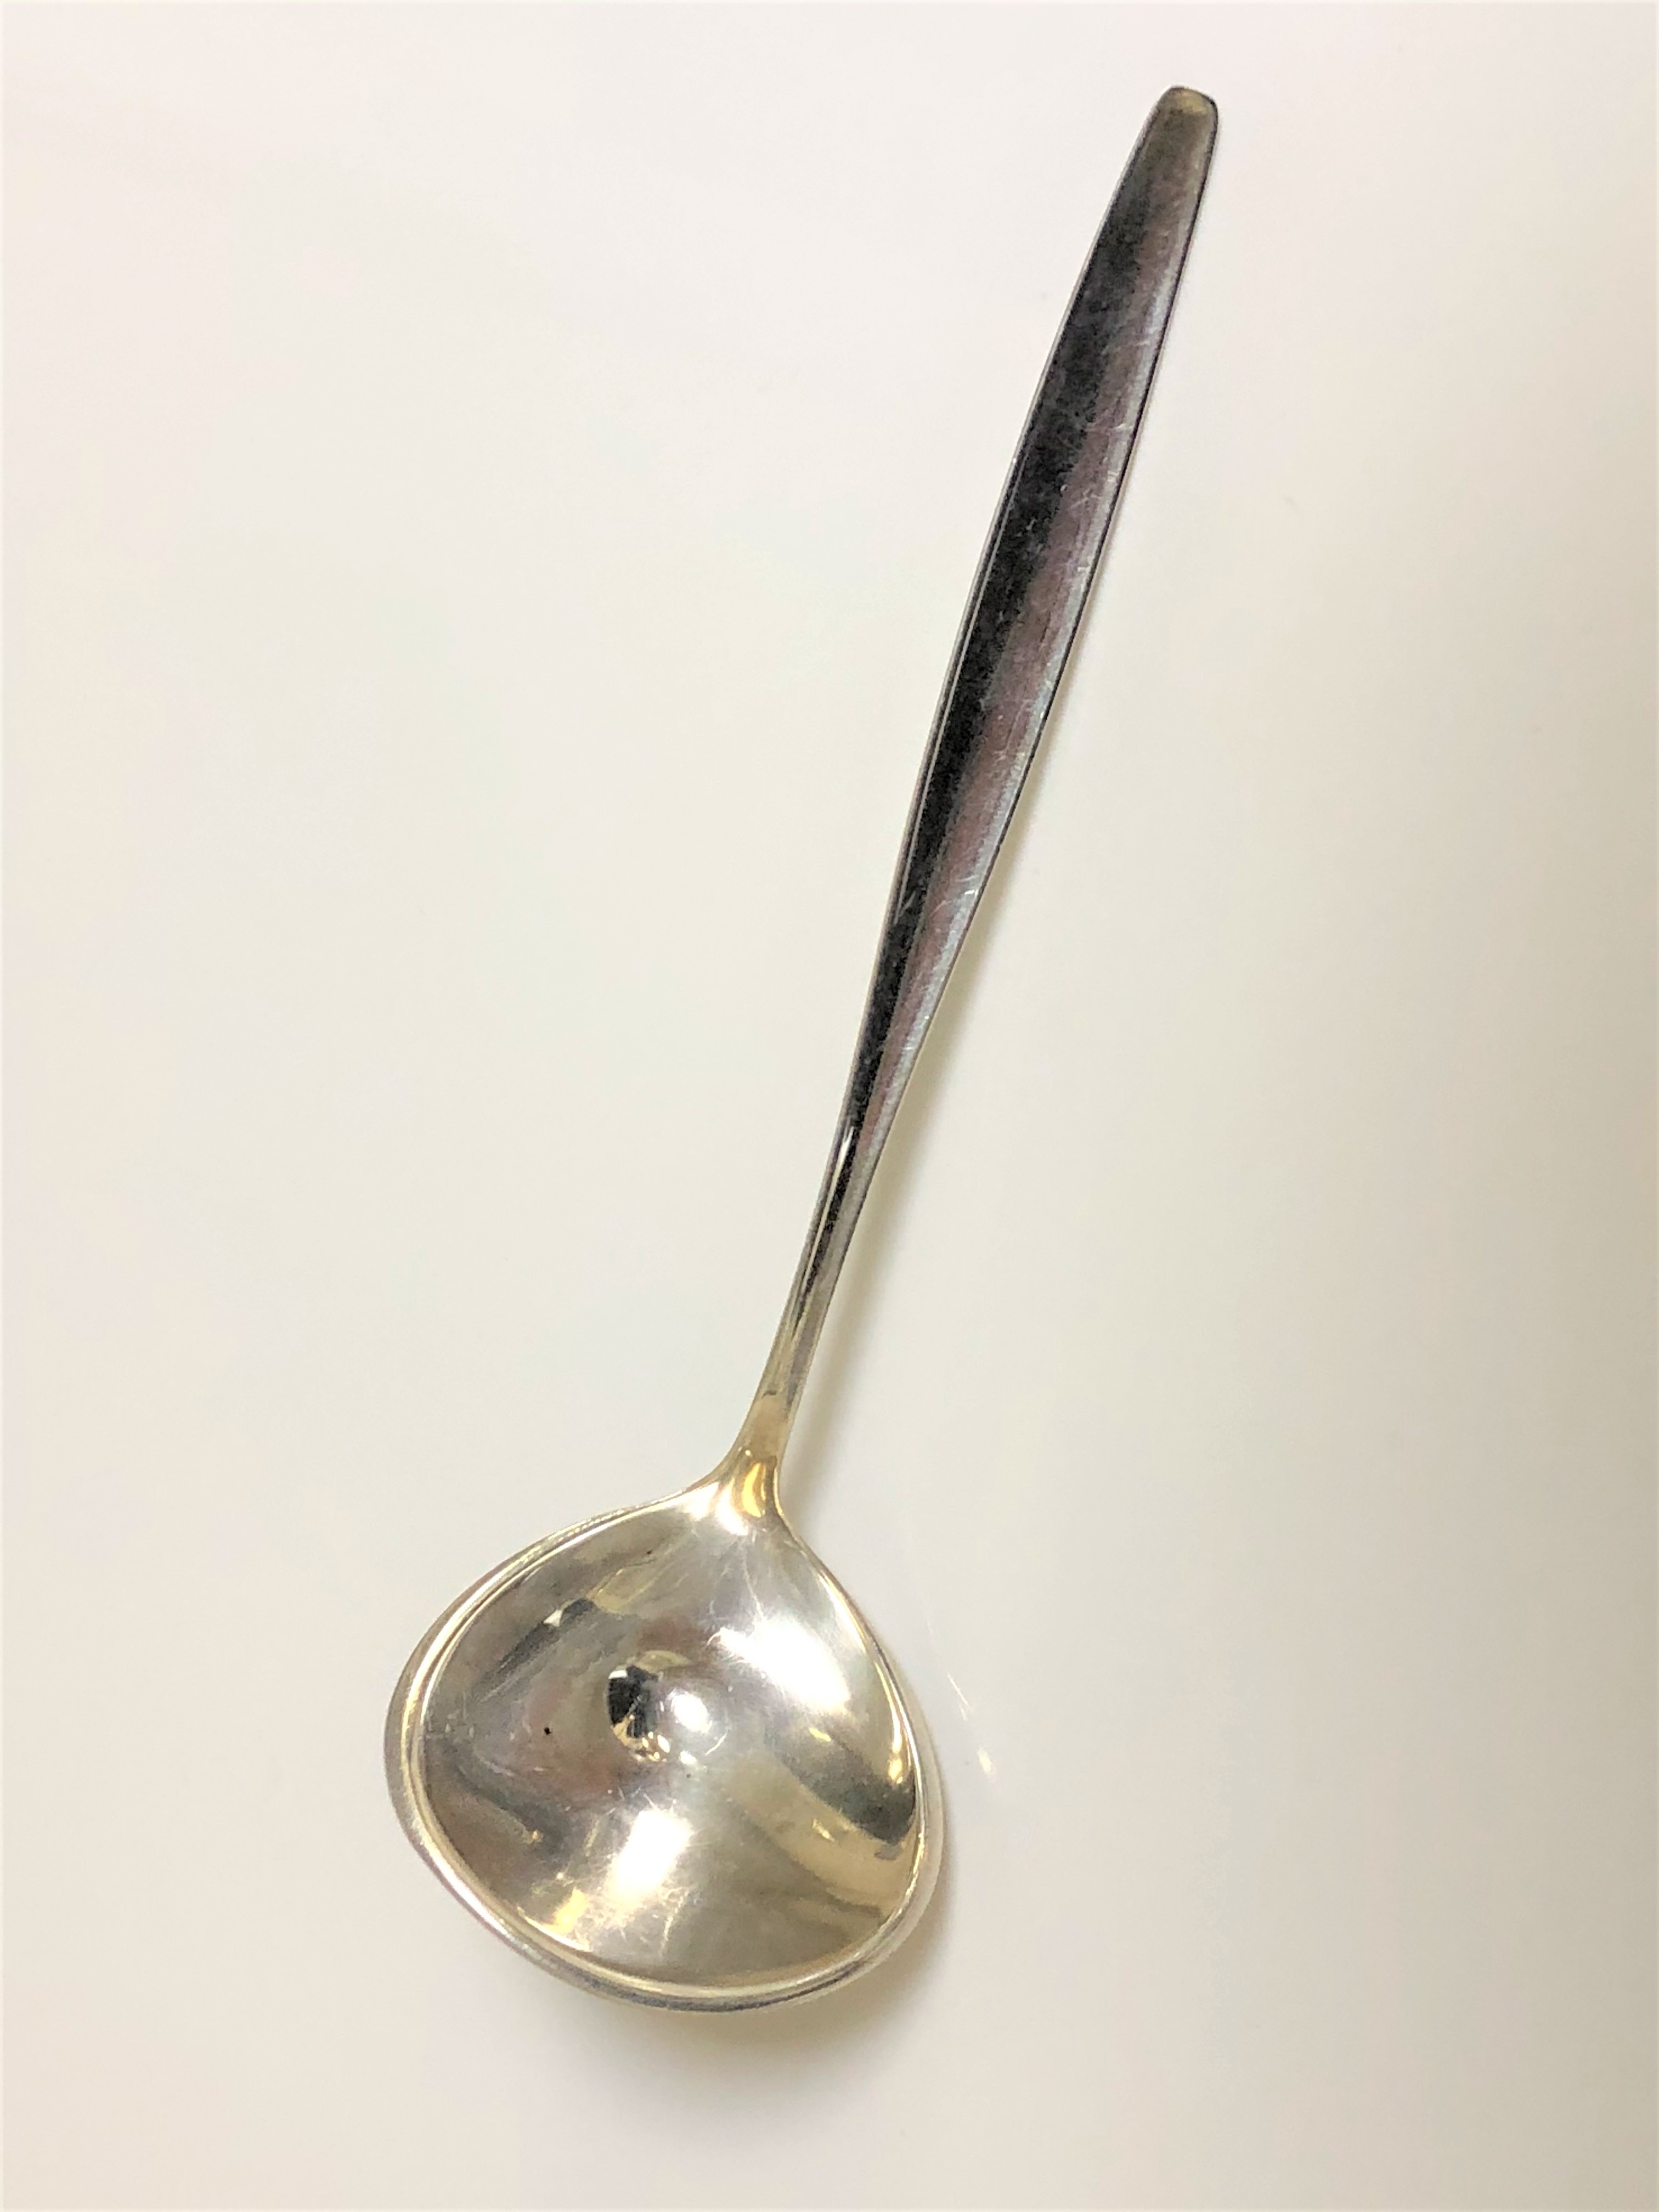 A George Jensen silver ladle